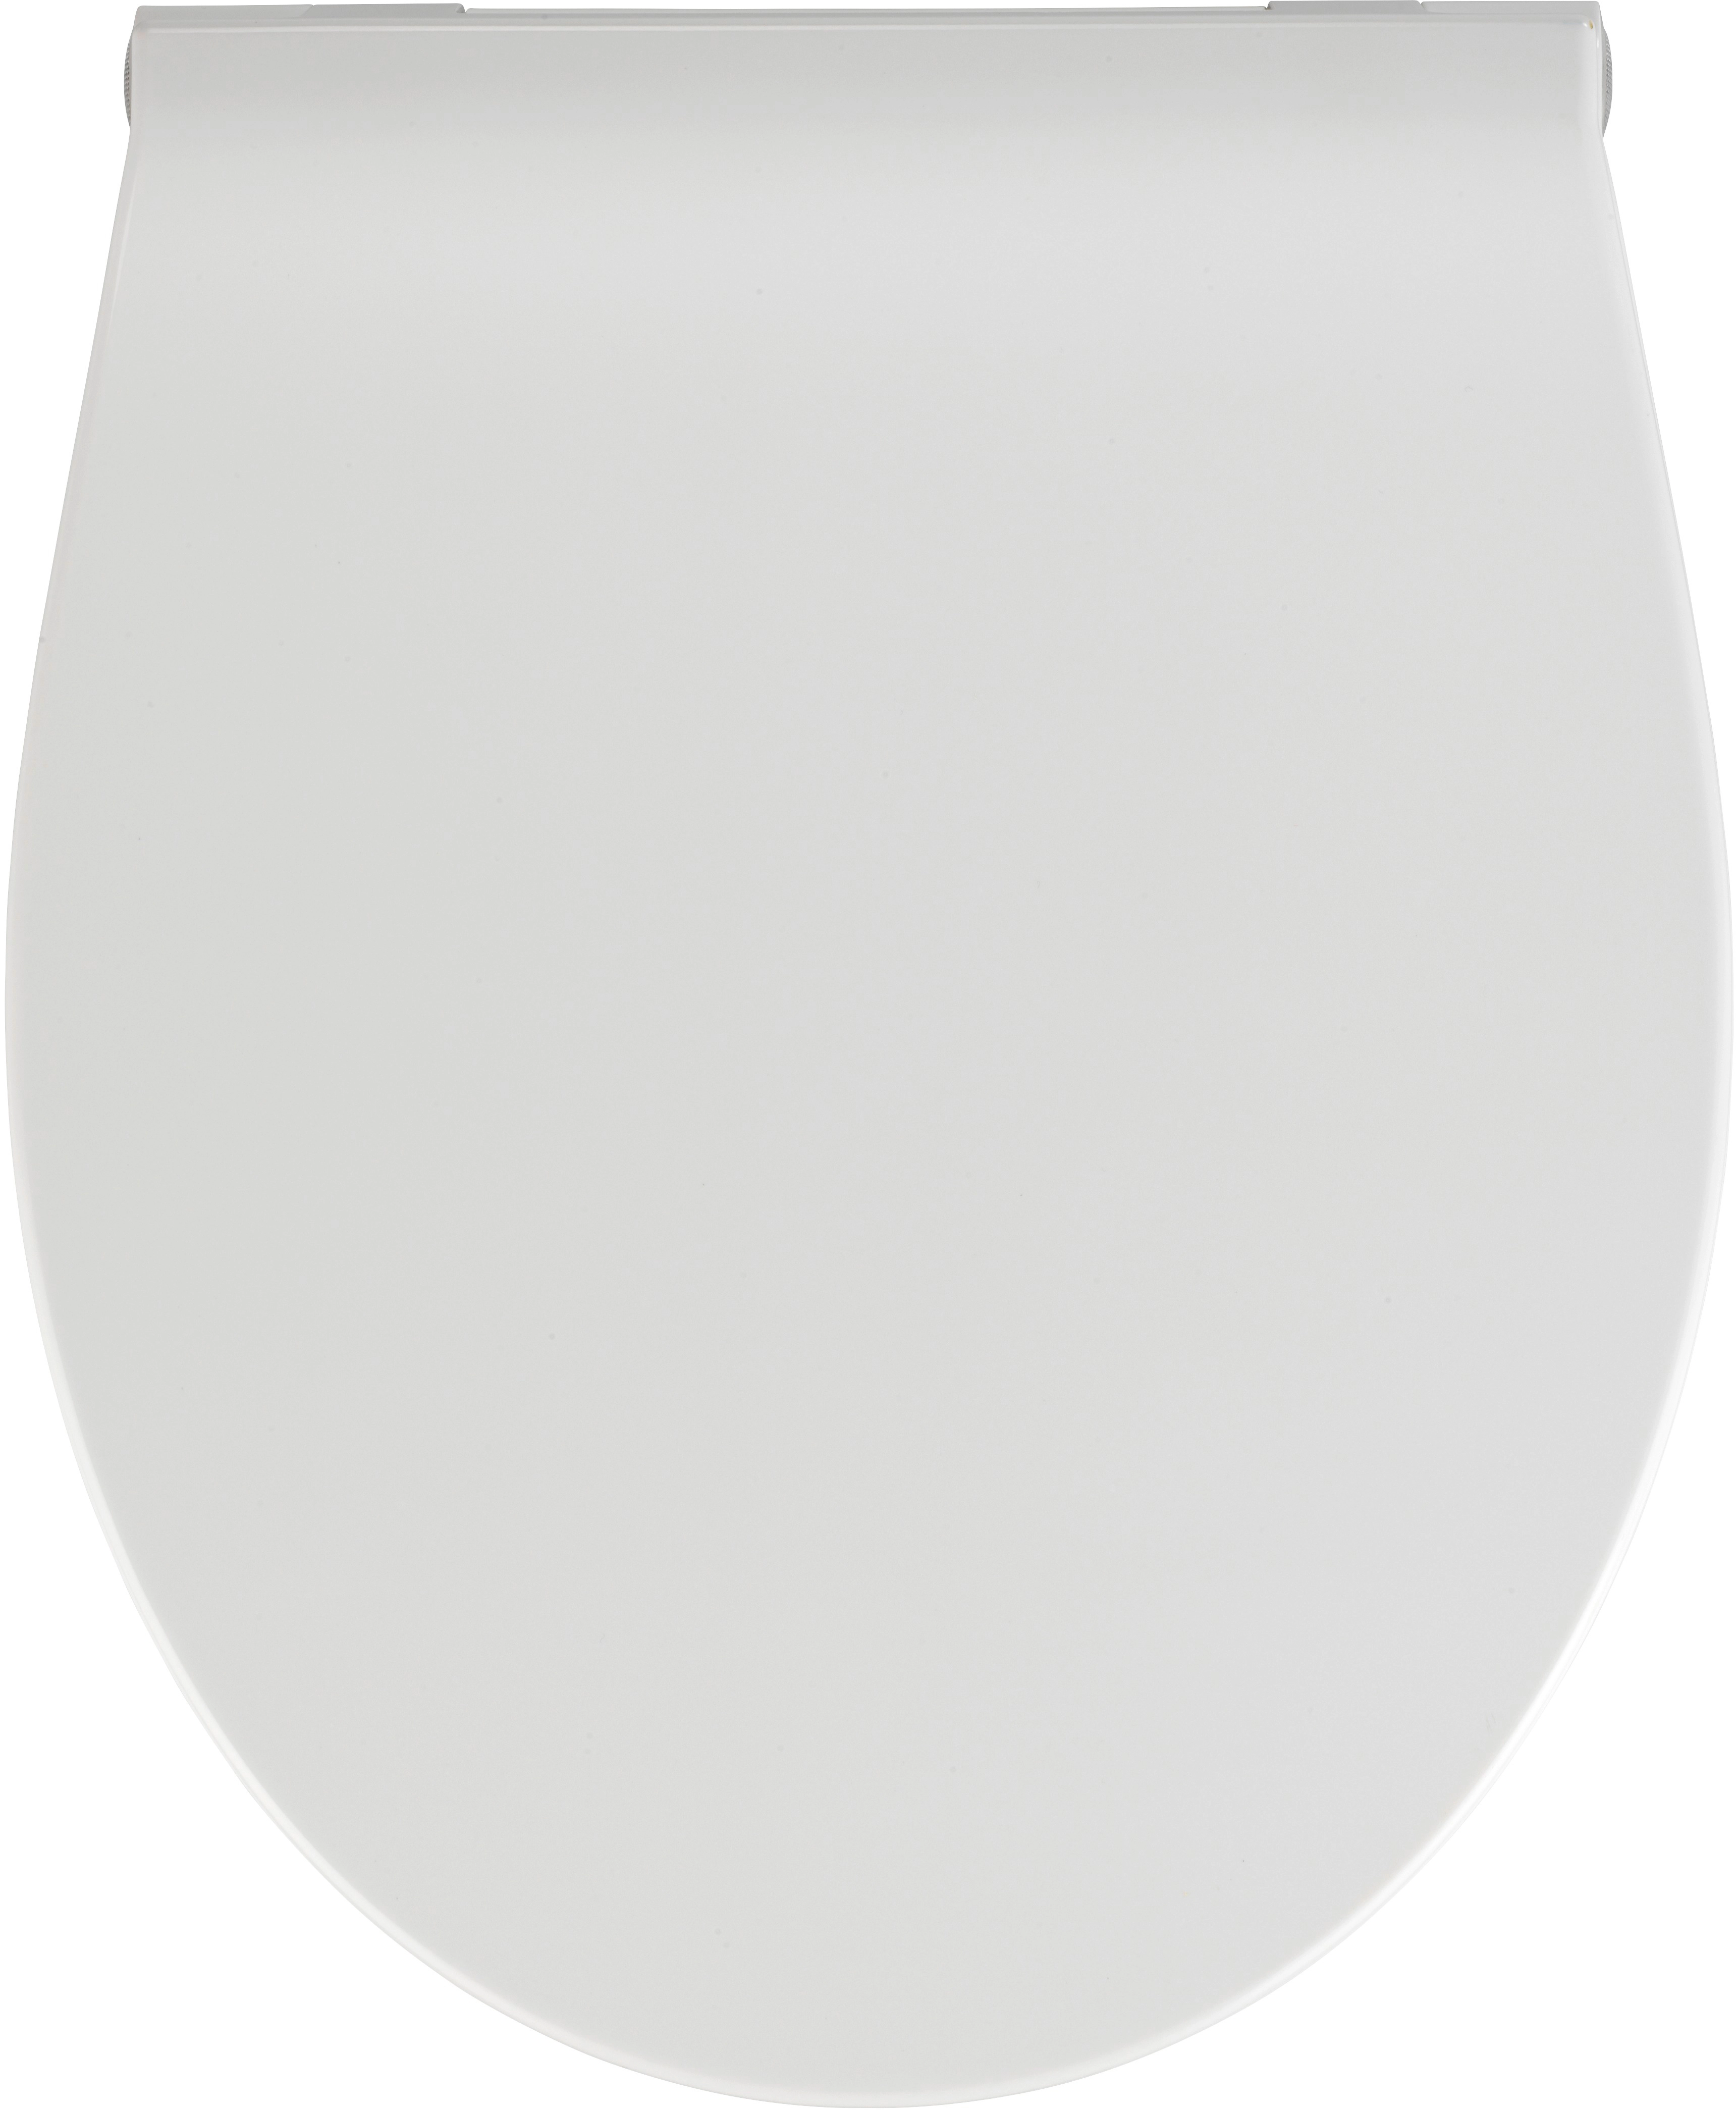 Premium LED Akustiksensor OBI kaufen bei WC-Sitz Wenko Weiß